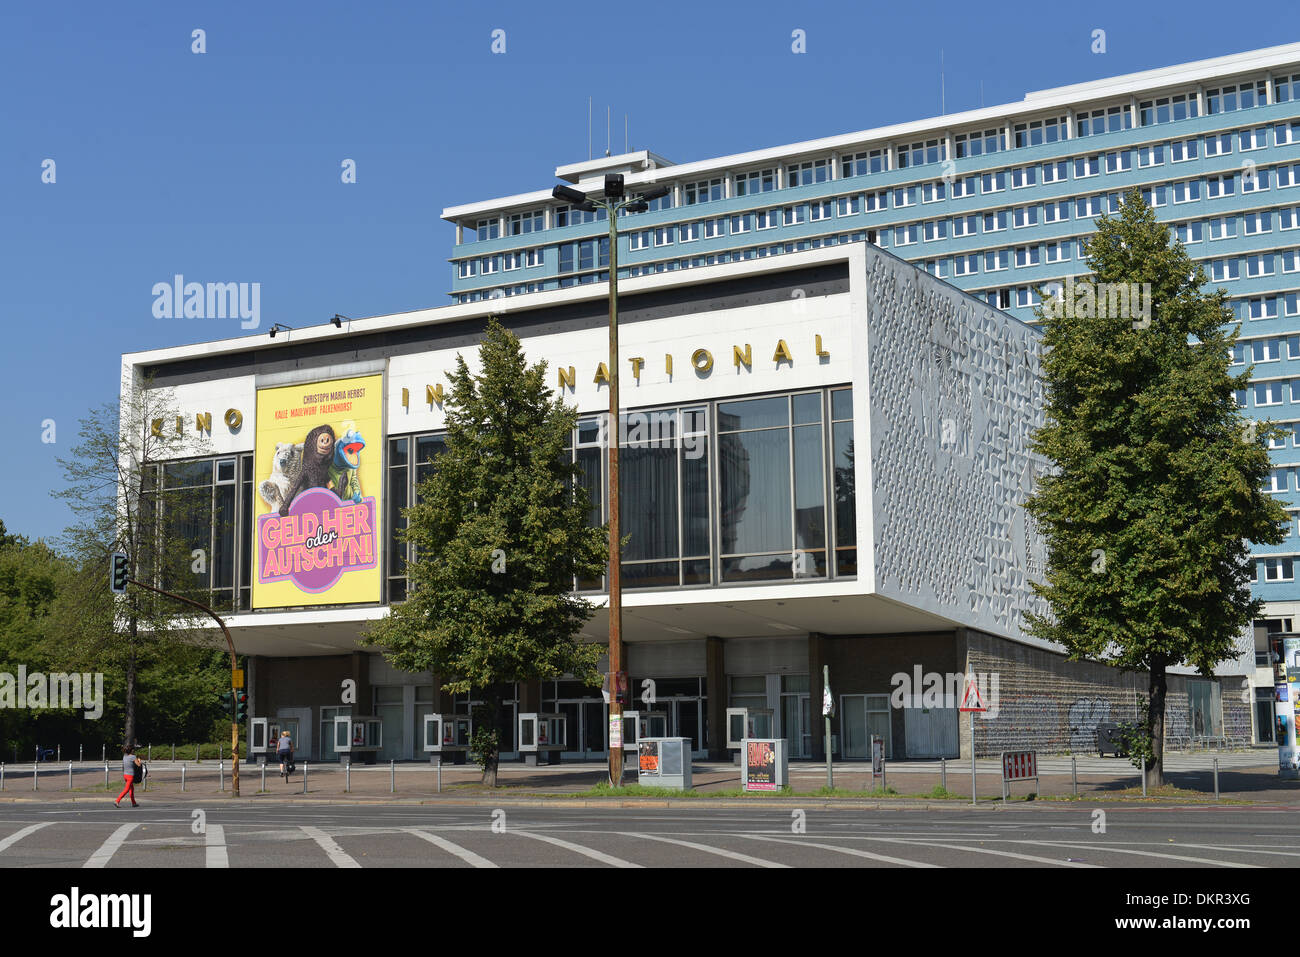 Kino International, Karl-Marx-Allee, Berlino, Deutschland Foto Stock